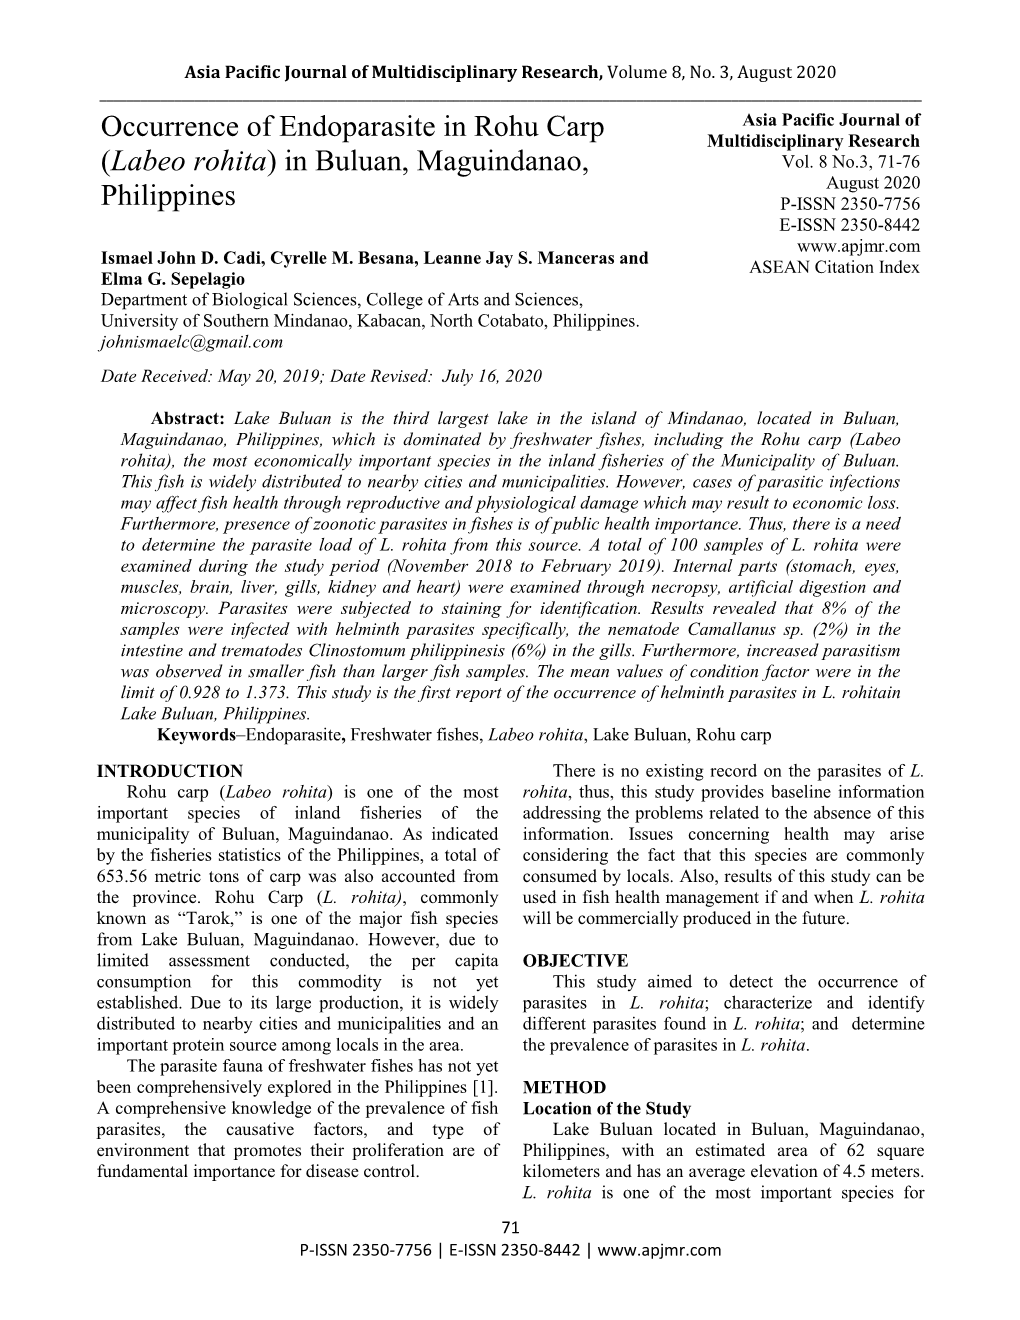 Occurrence of Endoparasite in Rohu Carp (Labeo Rohita) in Buluan